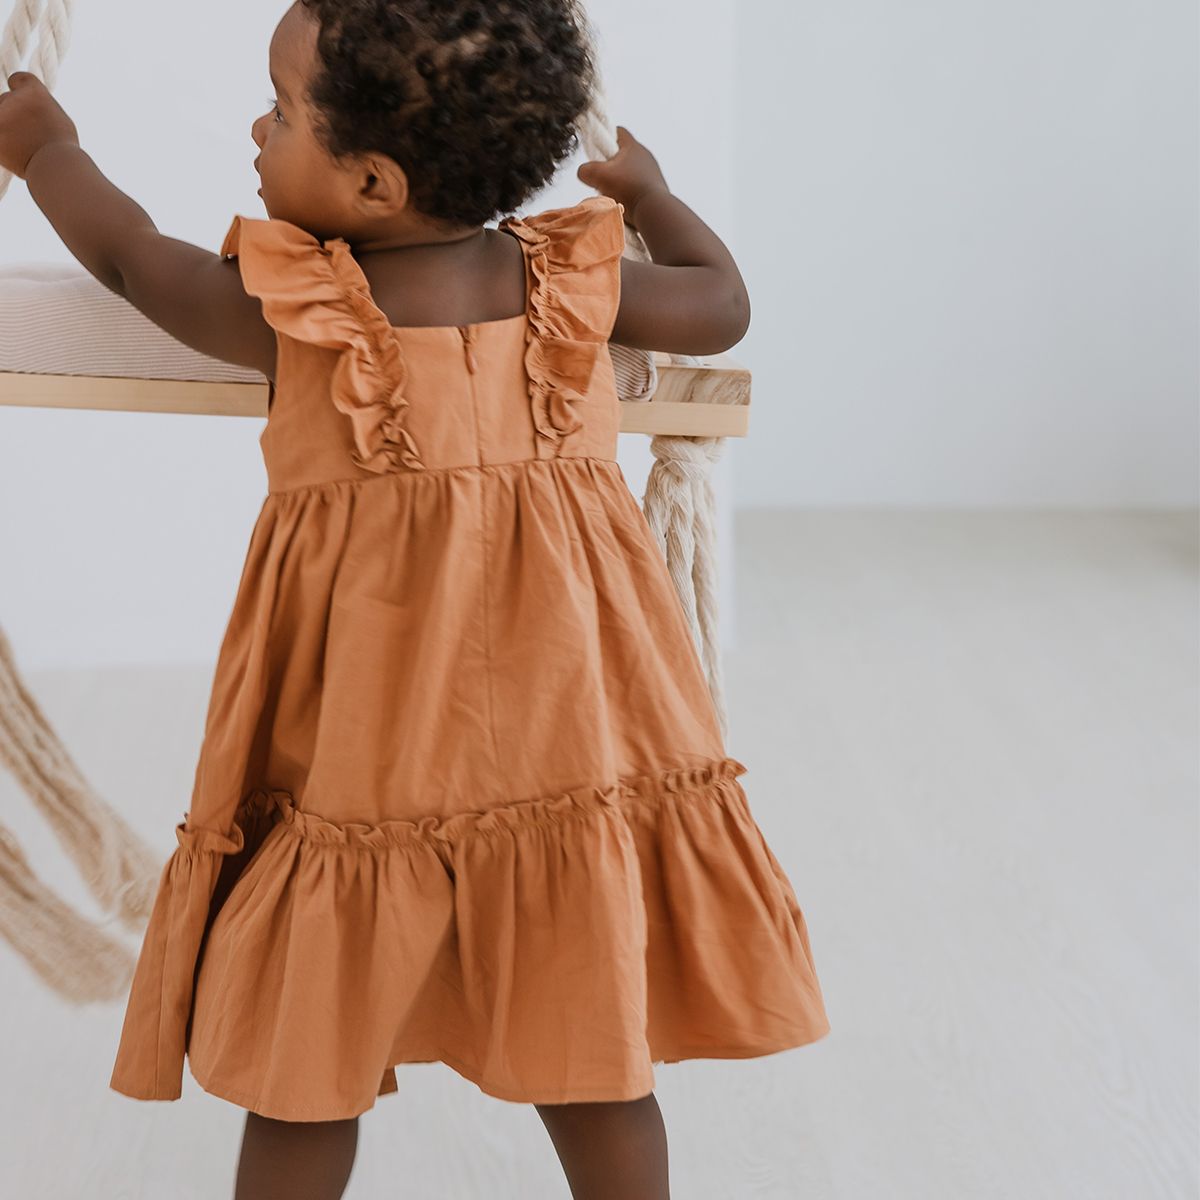 Girls Ruffled Baby Doll Dress in Caramel